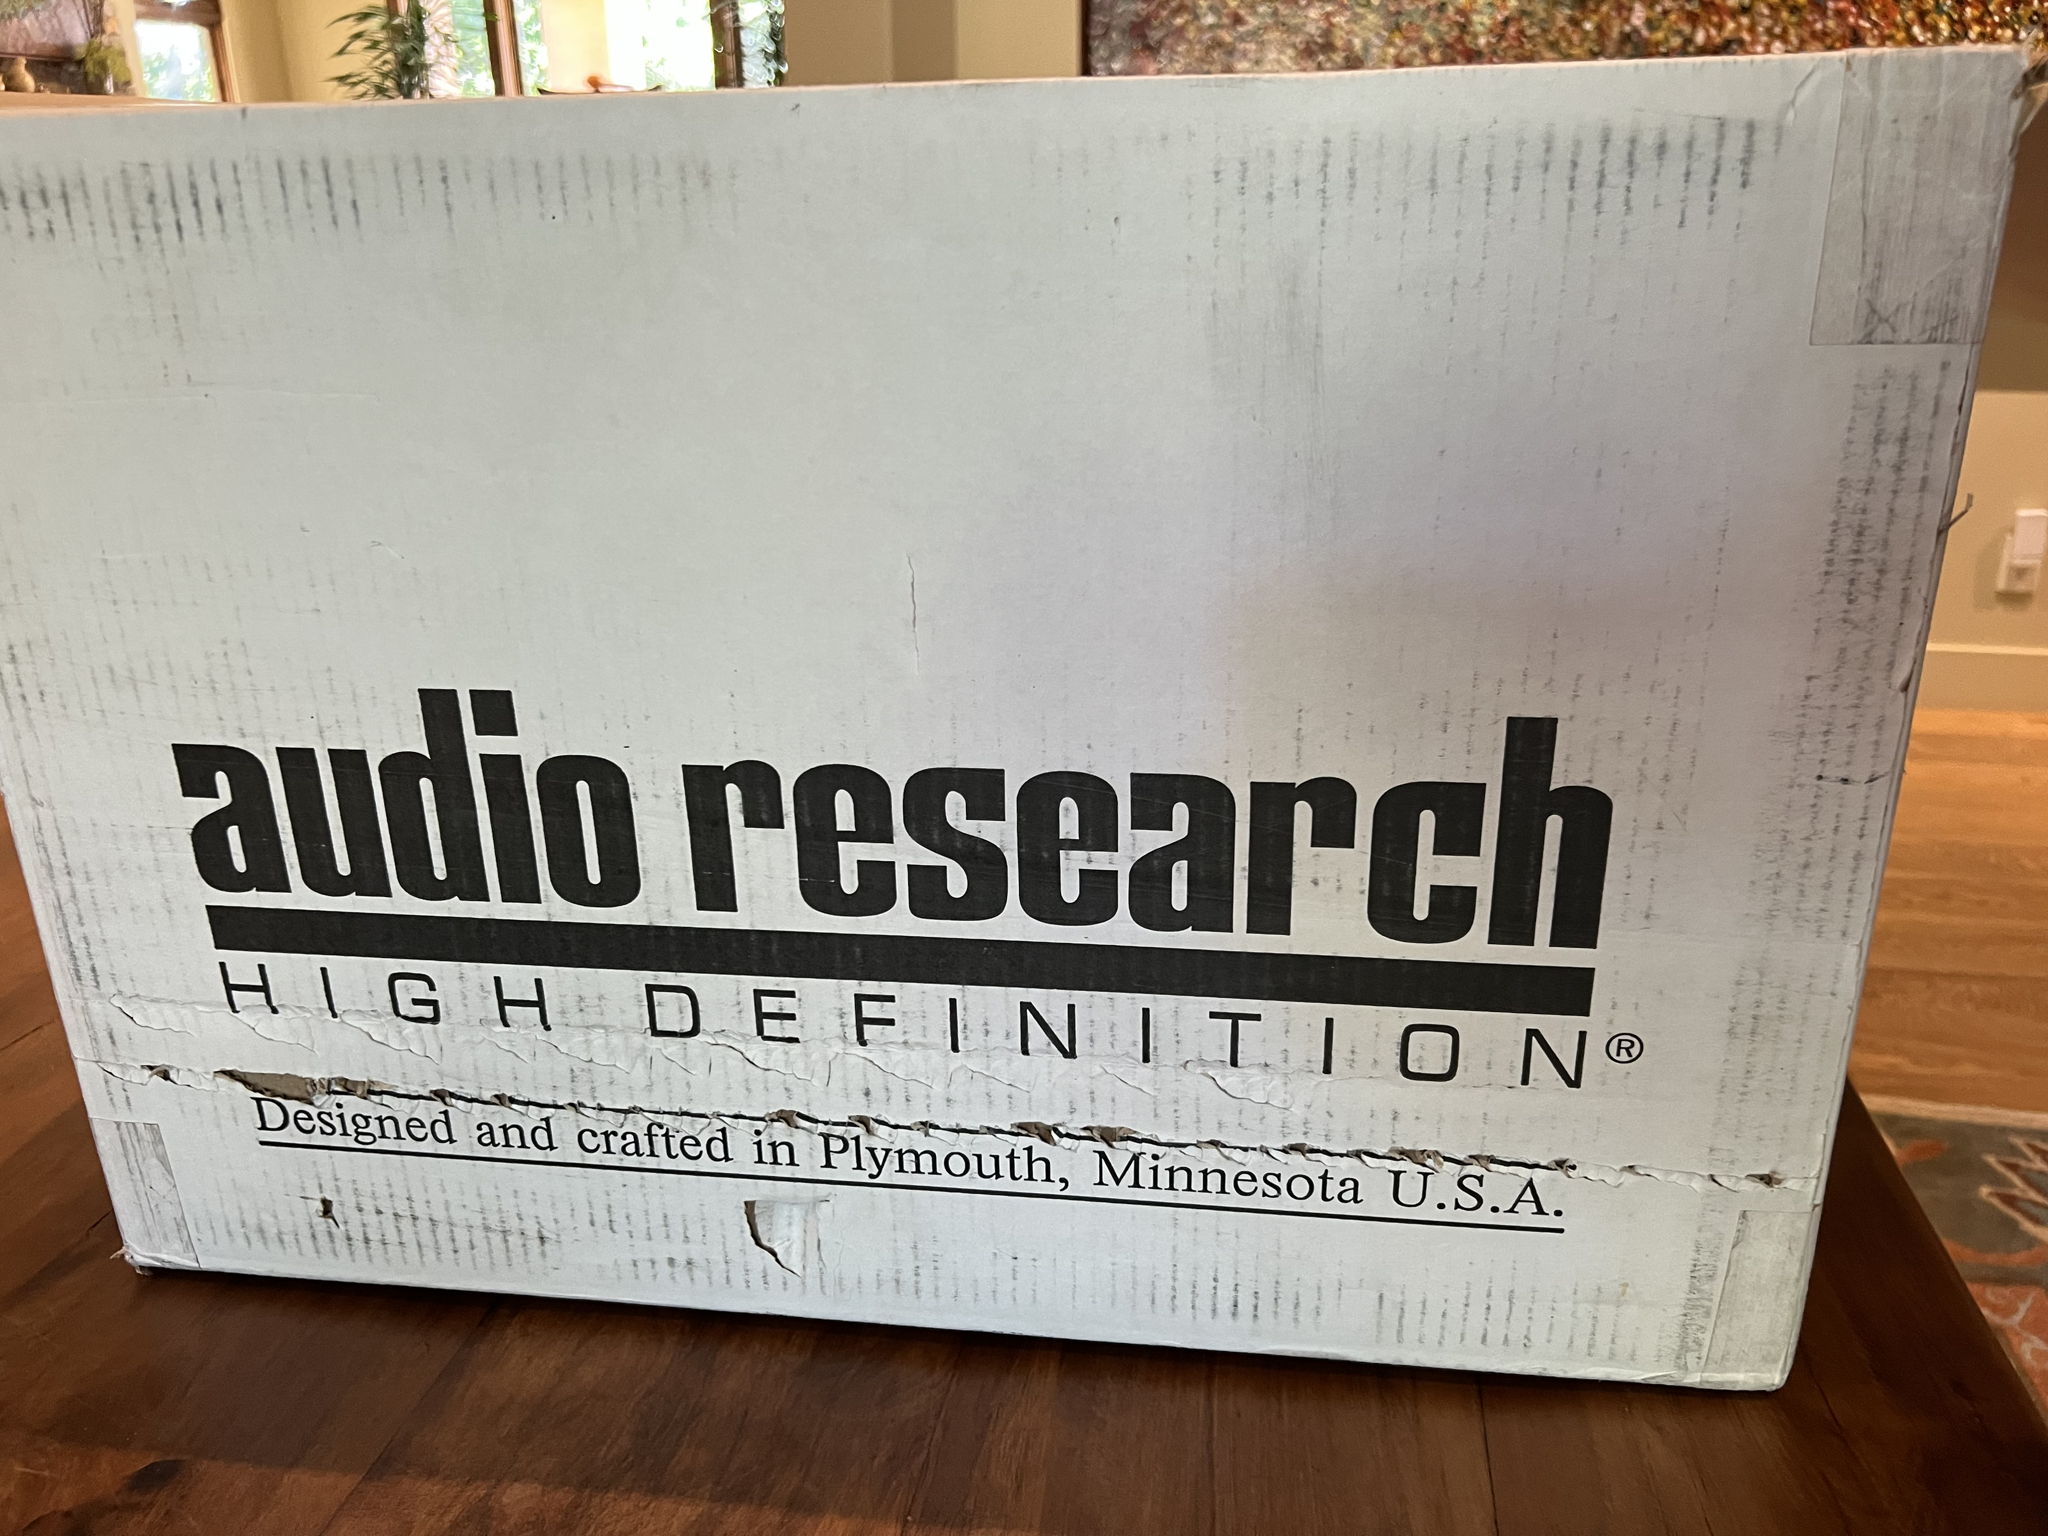 Audio Research Ls28 9